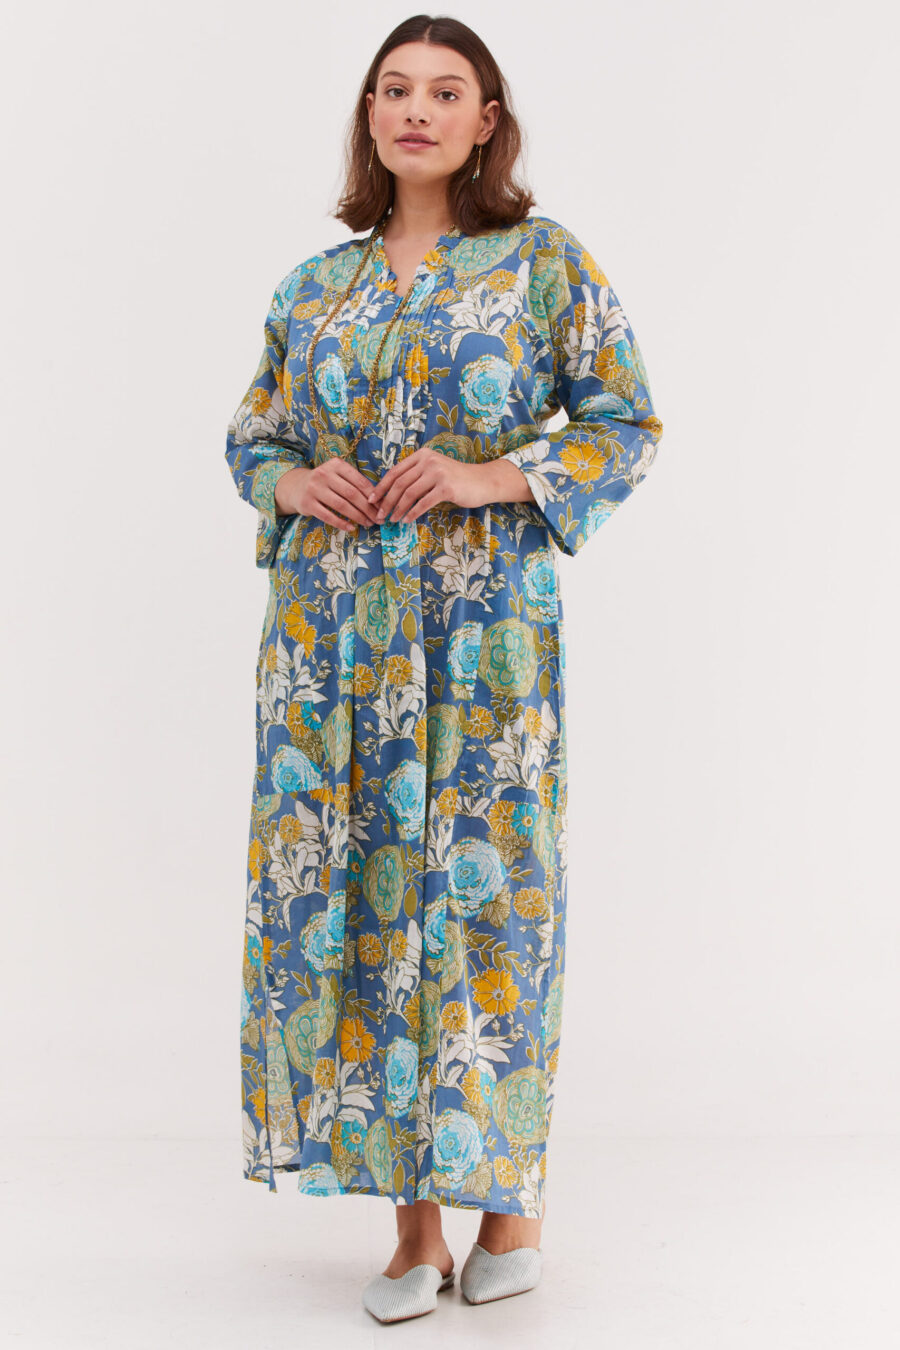 Irit dress | Uniquely designed dress - Blue blossom, colorful floral print on a blue dress by comfort zone boutique